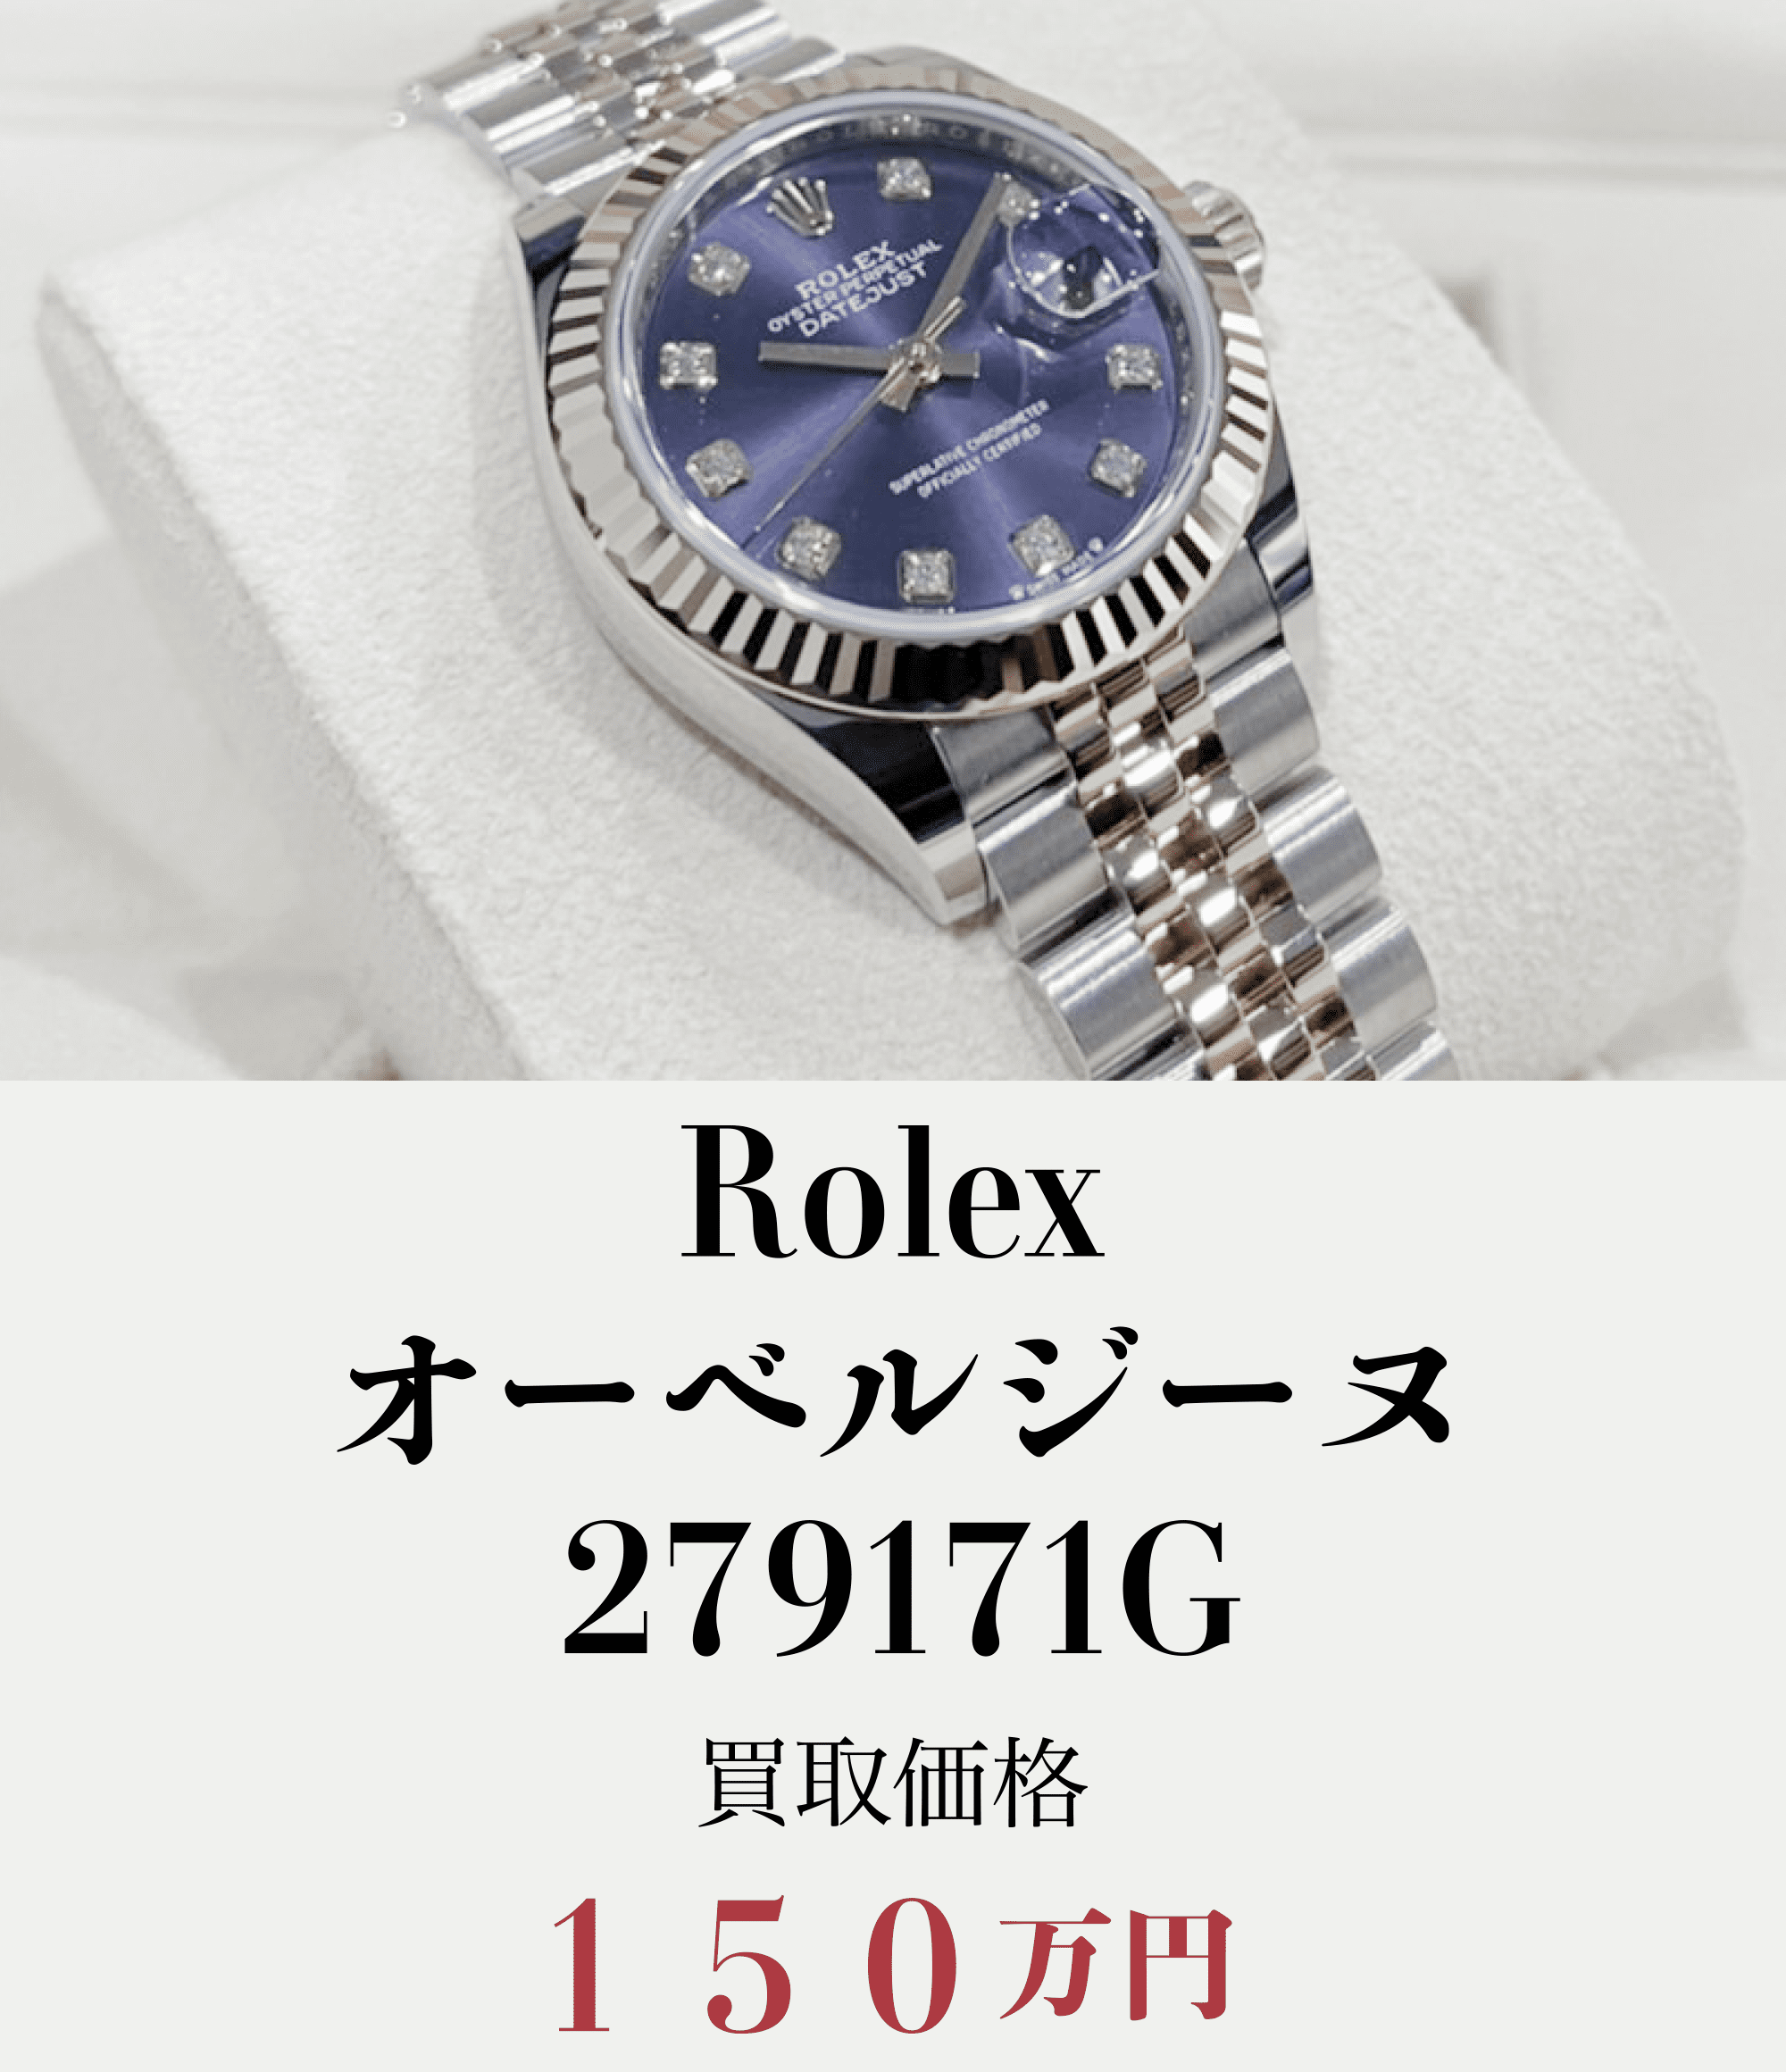 Rolex.オーベルジーヌ279171G買取価格150万円